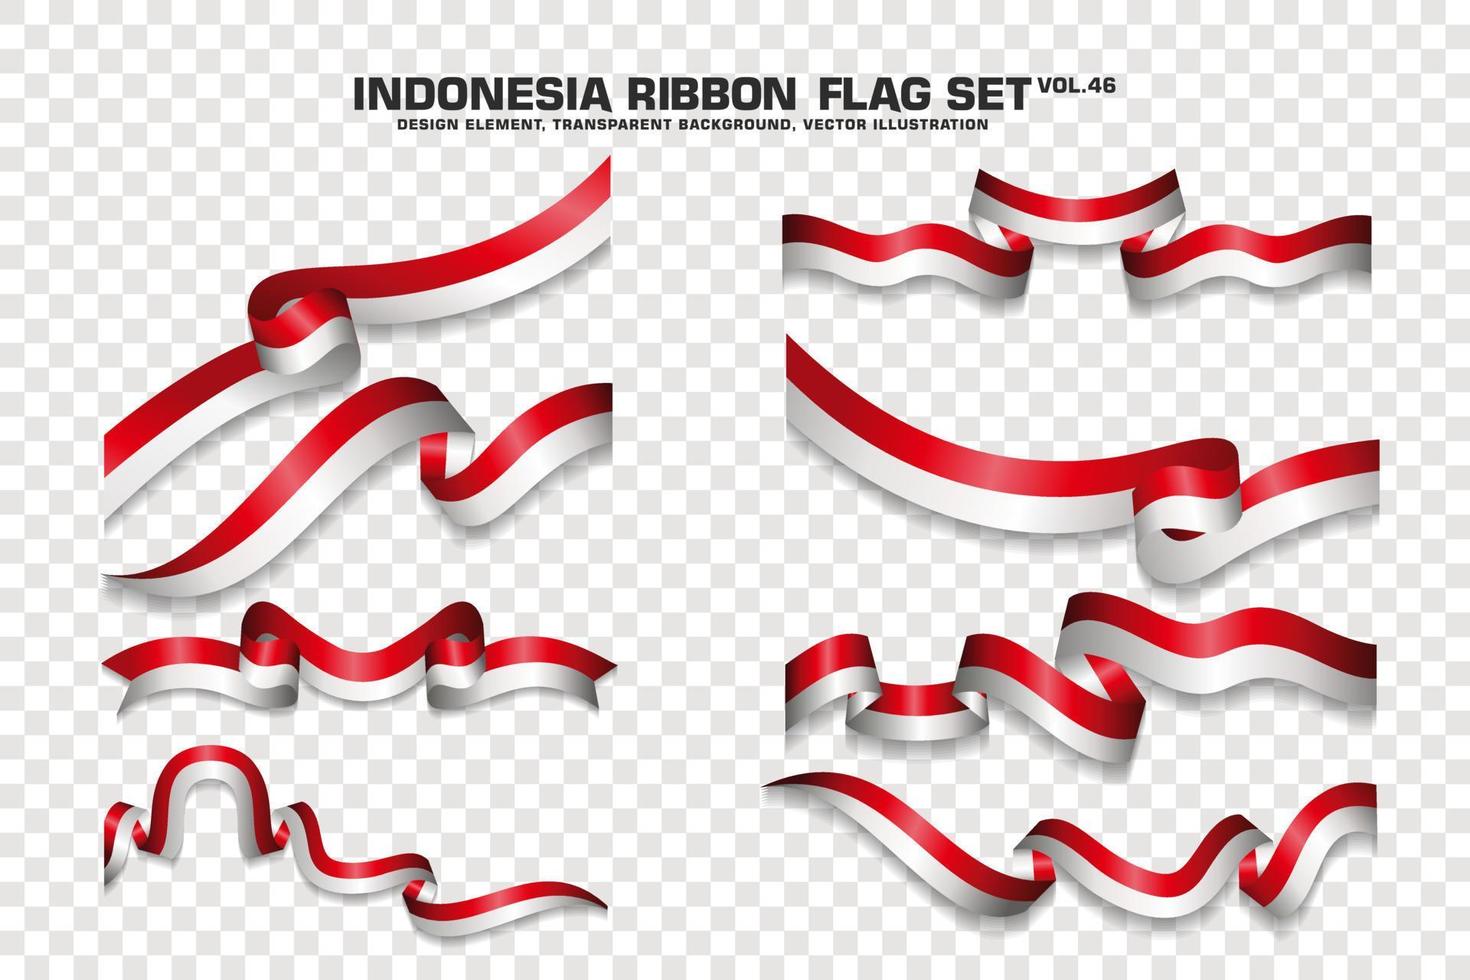 Indonesië lint vlaggen set, element ontwerp, 3D-stijl. vector illustratie